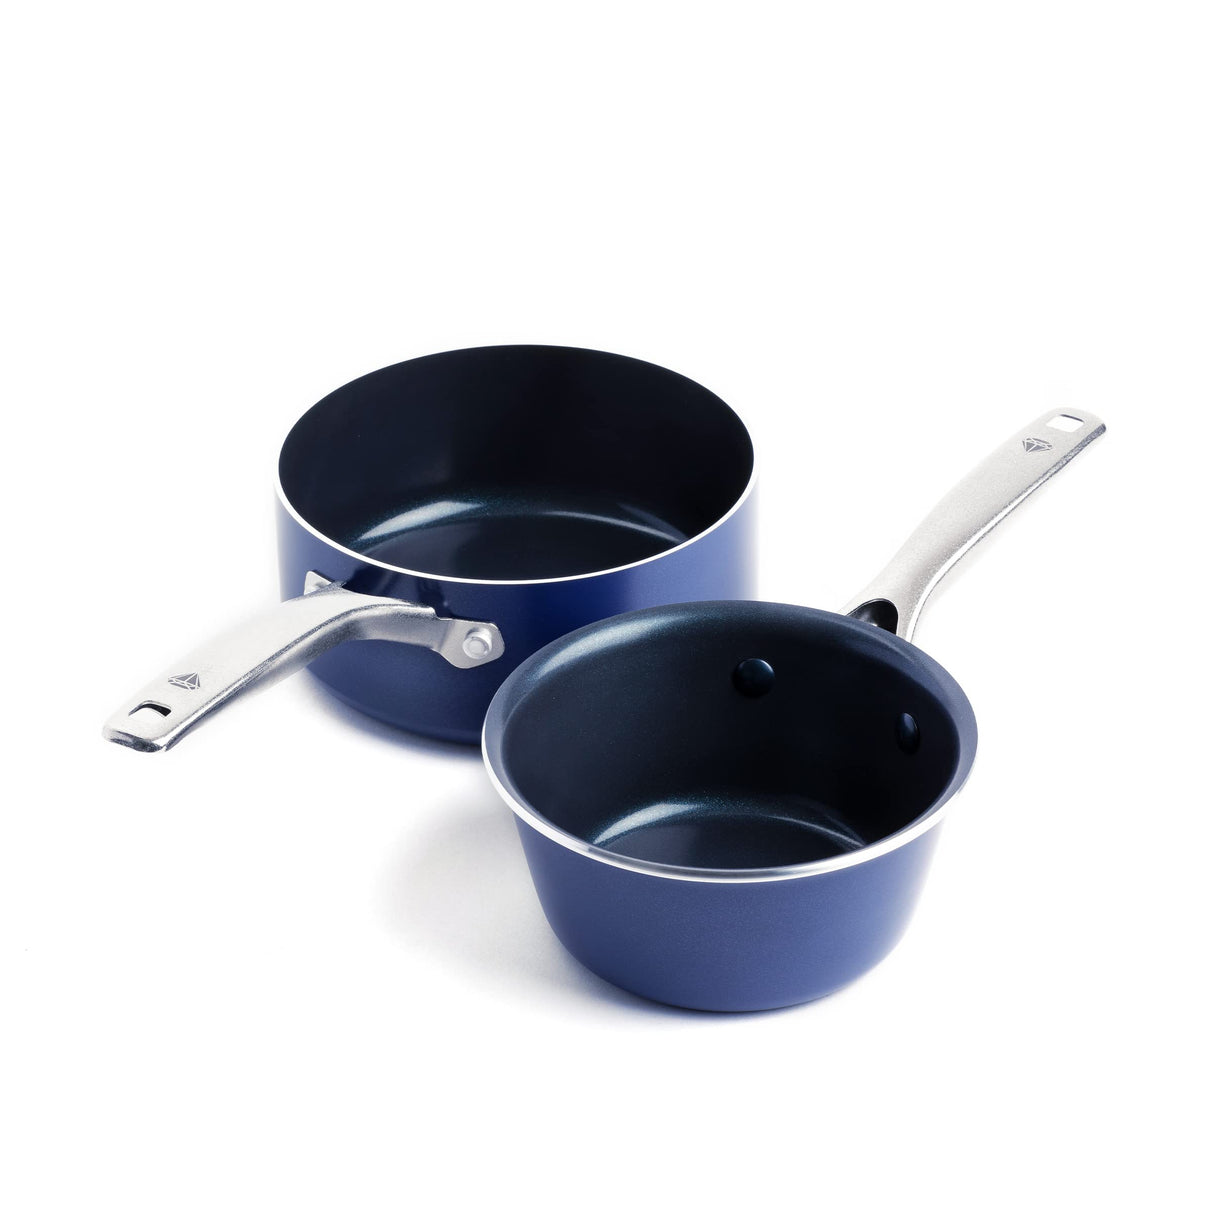 Blue Diamond Cookware Diamond Infused Ceramic Nonstick, 1QT and 2QT Saucepan Pot Set, PFAS-Free, Dishwasher Safe, Oven Safe, Blue